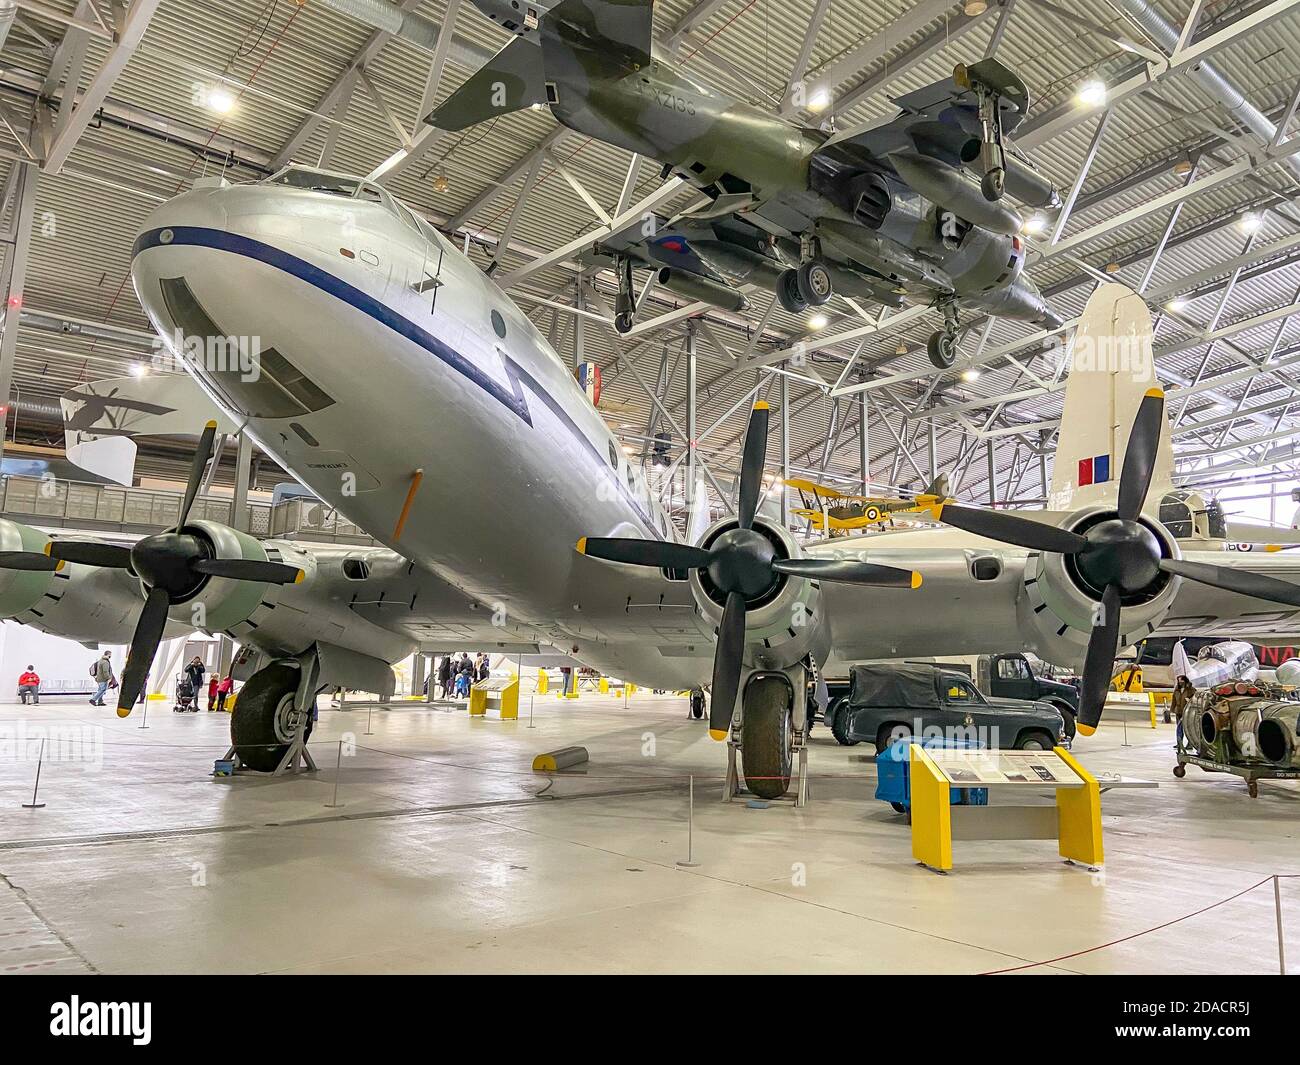 The Aircraft Hall at IWM Duxford, Duxford Airfield, Duxford, Cambridgeshire, Inglaterra, Reino Unido Foto de stock